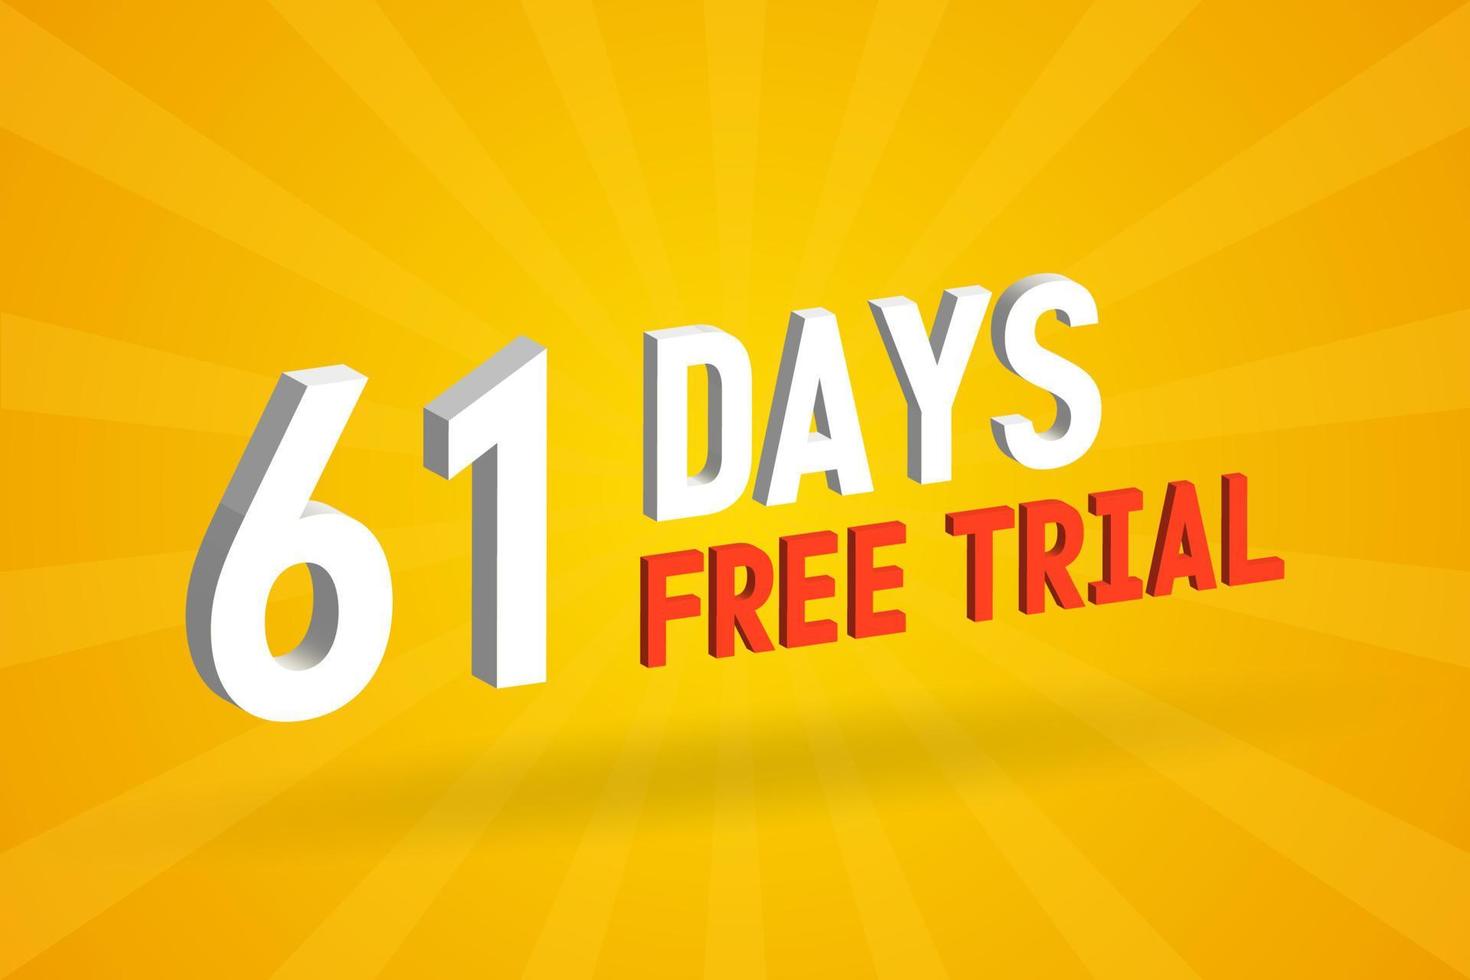 oferta gratuita 61 días de prueba gratuita texto 3d stock vector